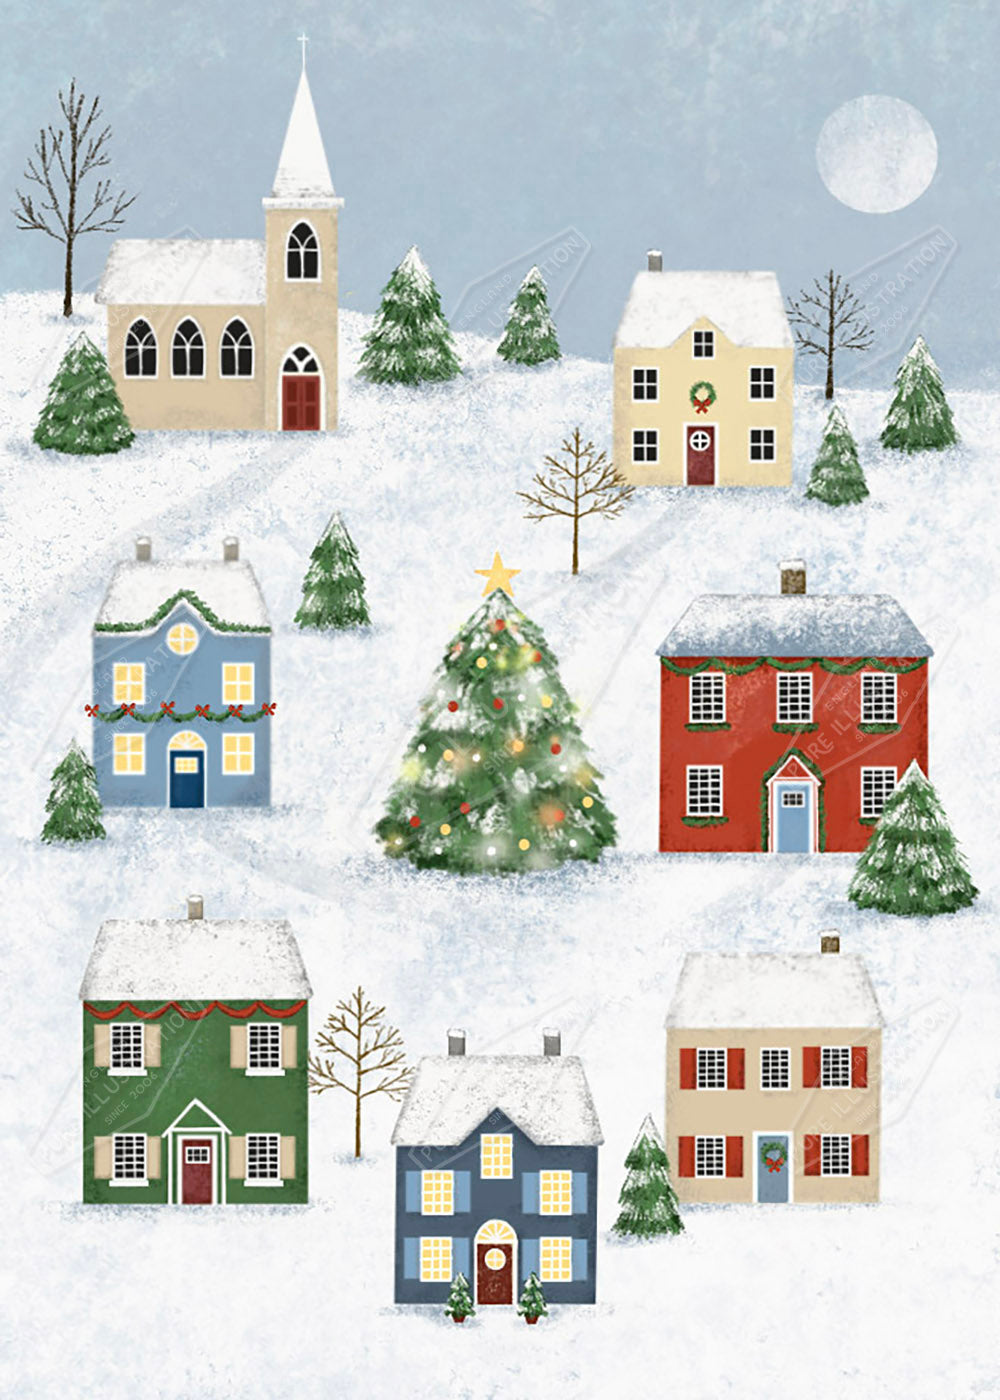 00034404AAI - Pure Art Licensing Agents - Winter Village Scene Greeting Card Design